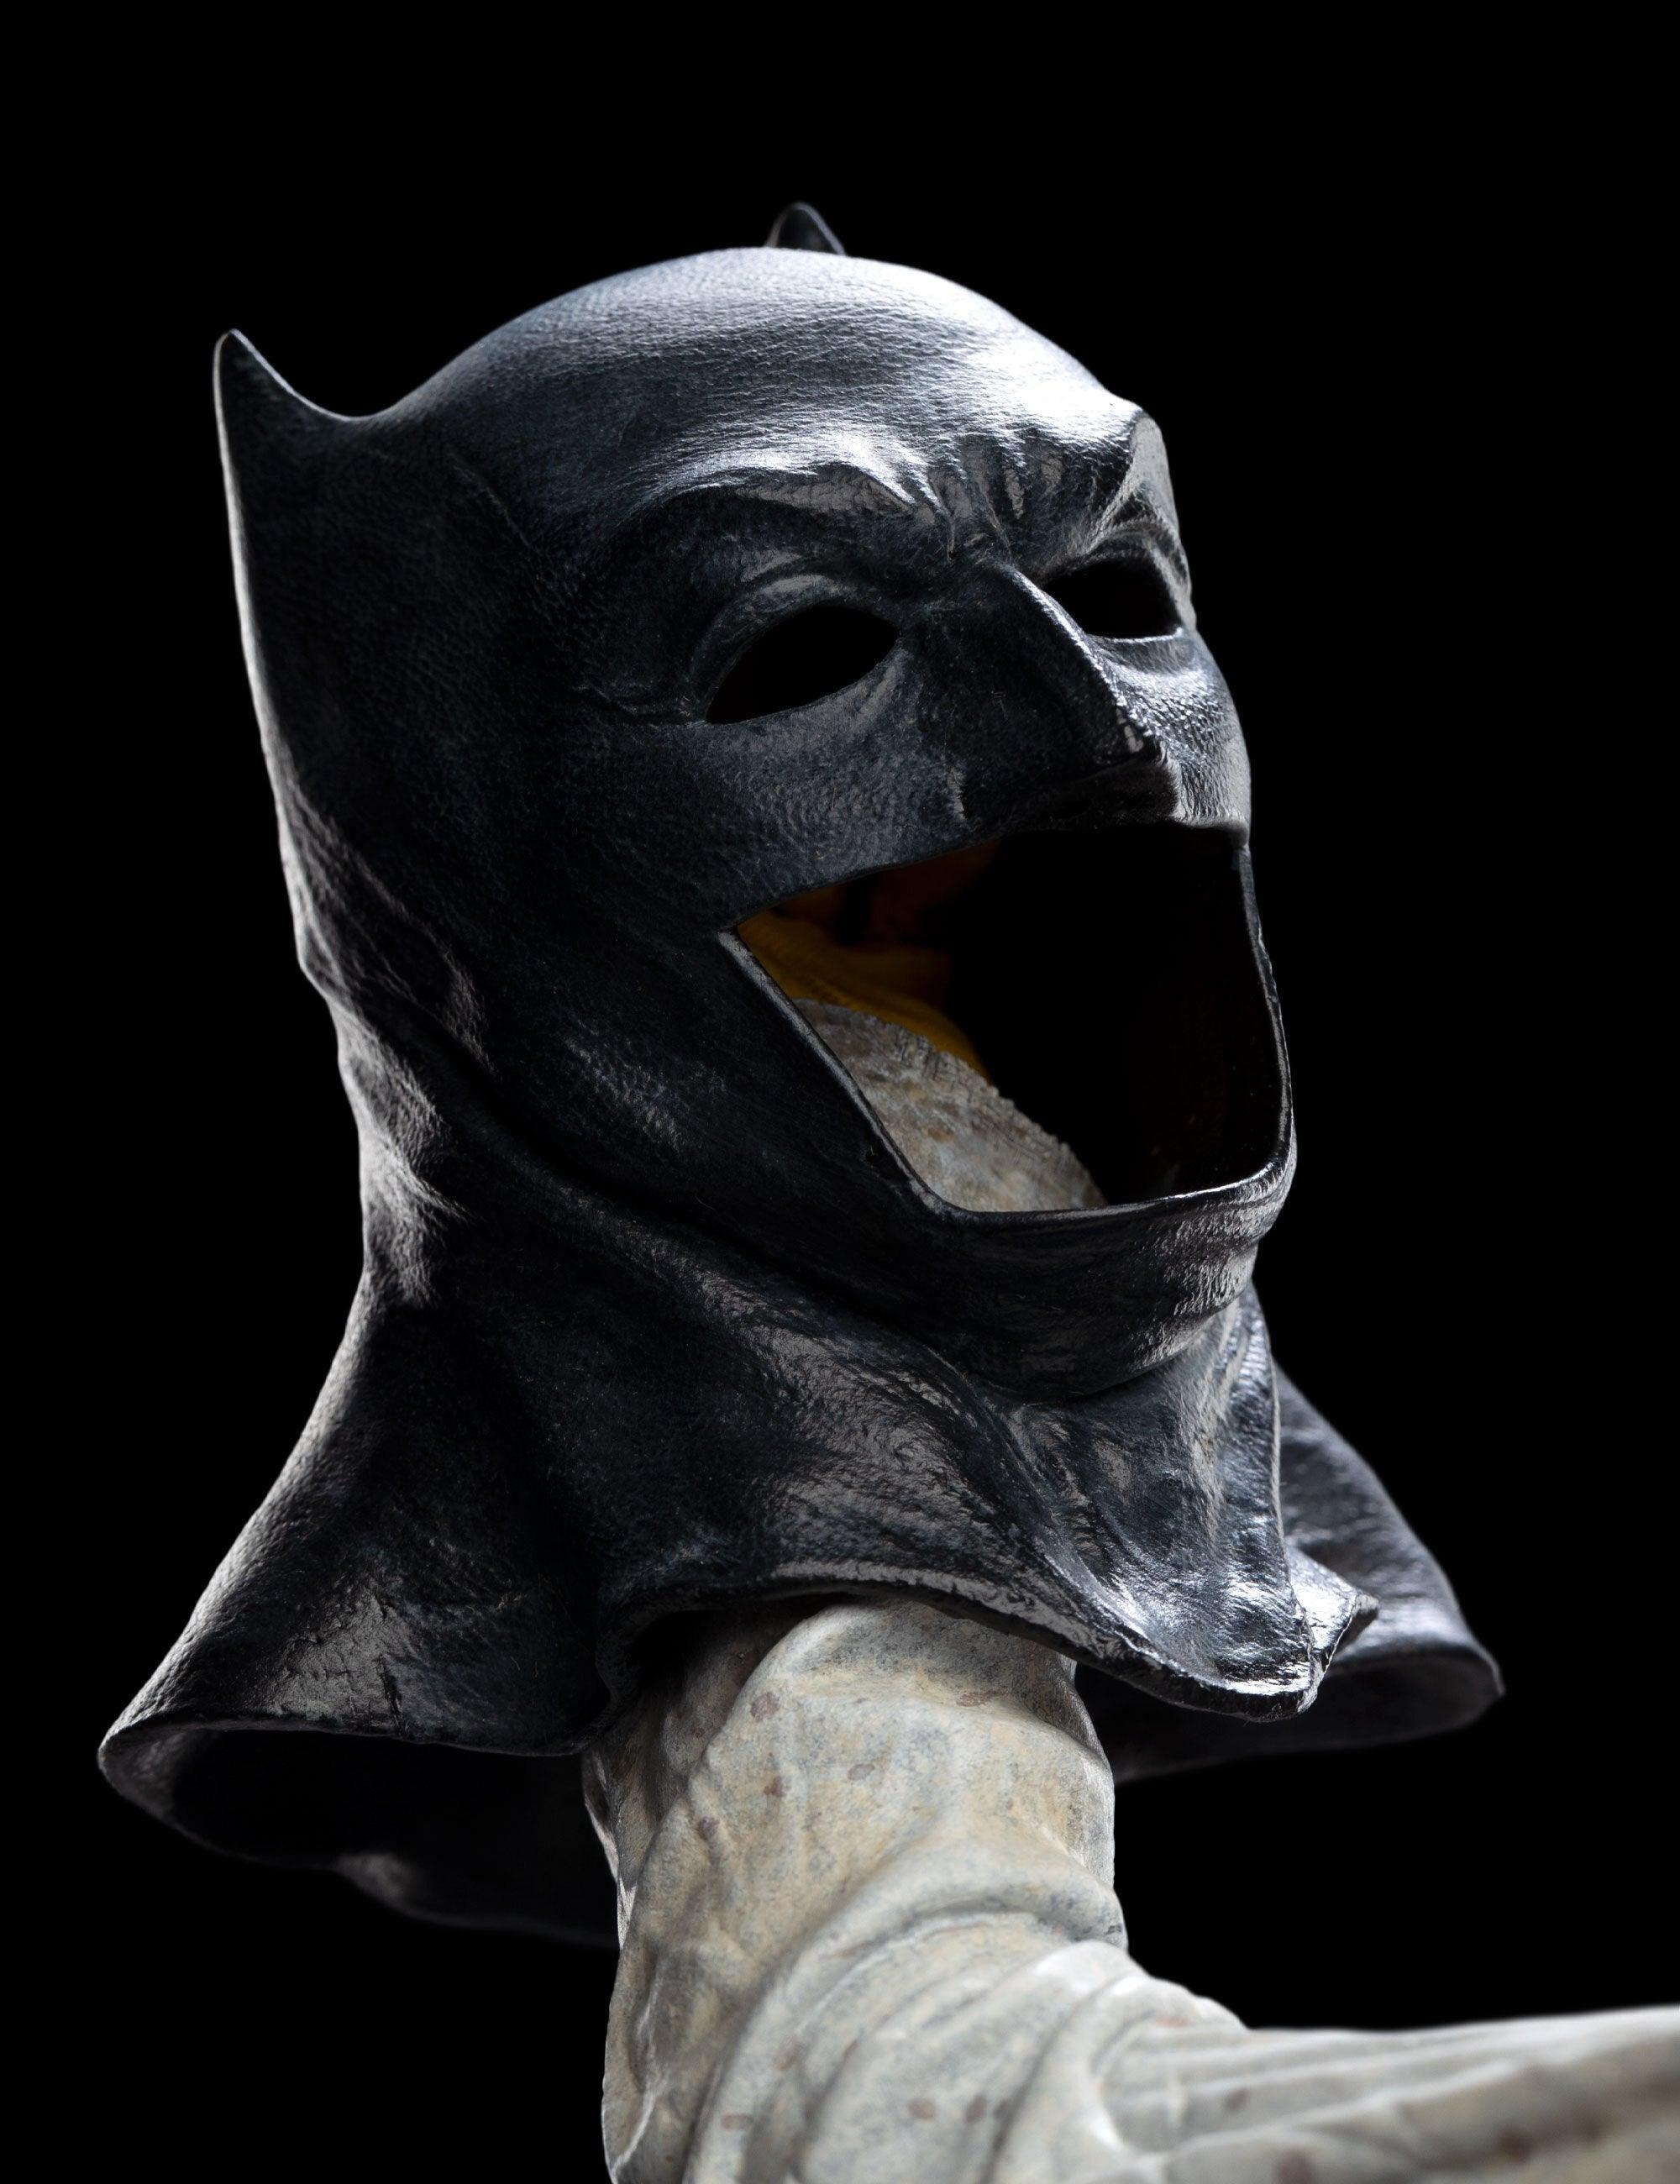 WET03751 Zack Snyder's Justice League (2021) - The Joker 1:4 Scale Statue - Weta Workshop - Titan Pop Culture